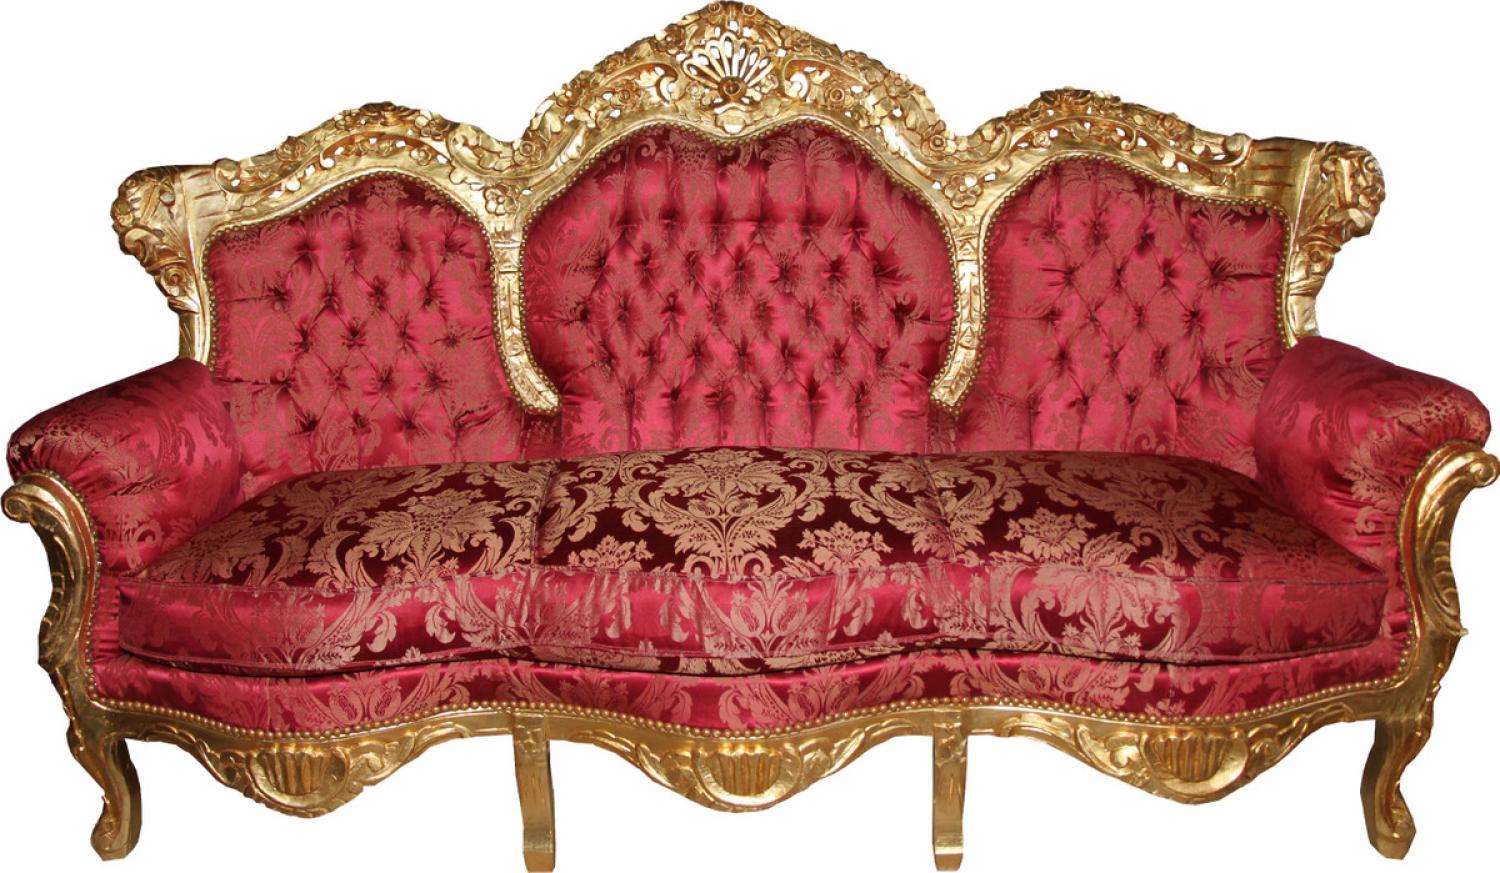 Casa Padrino Barock 3er Sofa Lord Bordeauxrot / Gold 184 x 81 x H. 125 cm - Handgefertigtes Wohnzimmer Sofa mit elegantem Muster - Barock Möbel Bild 1